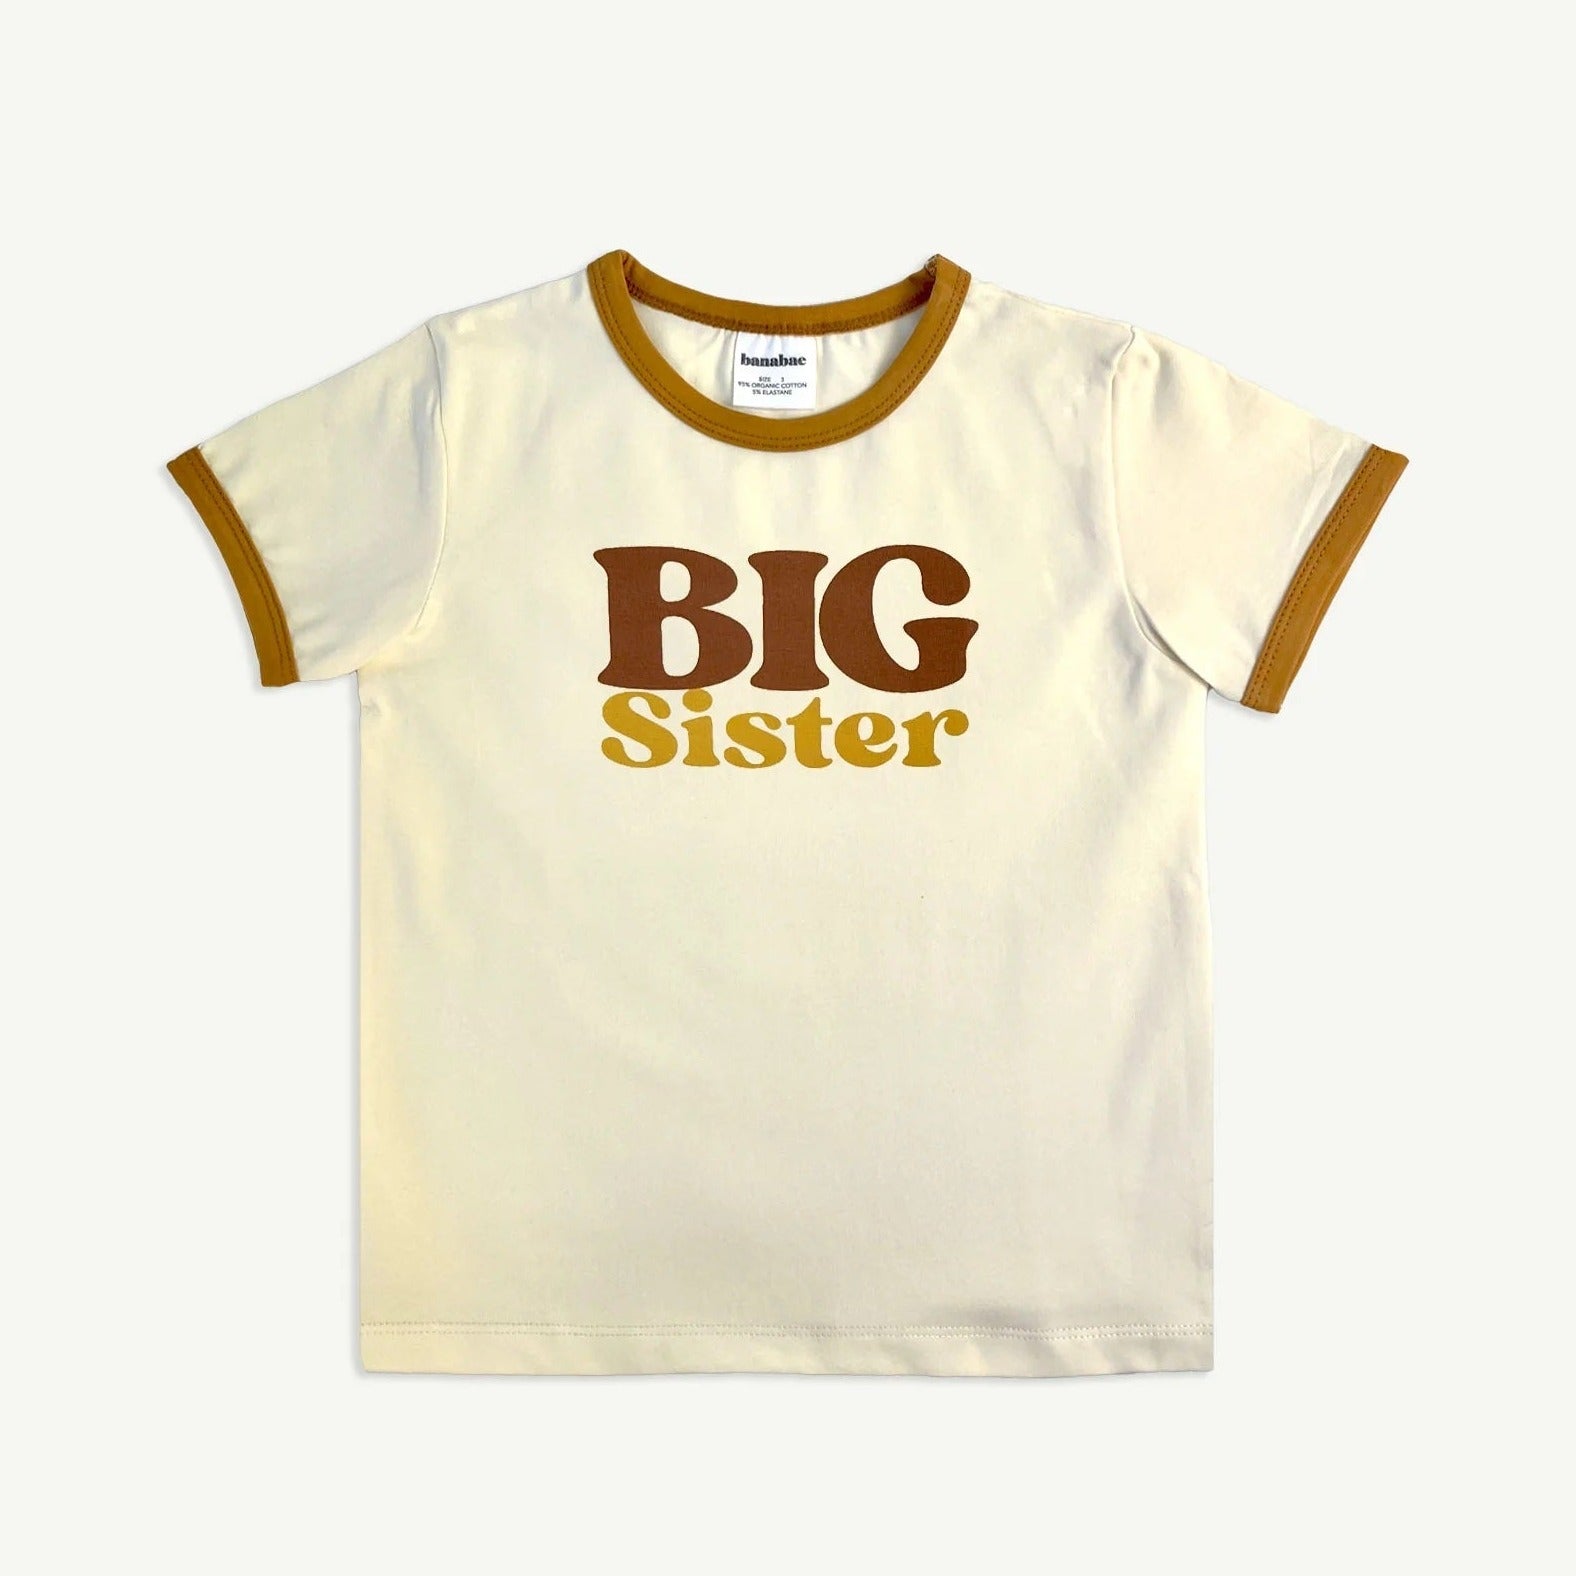 banabae big sister tshirt - angus and dudley